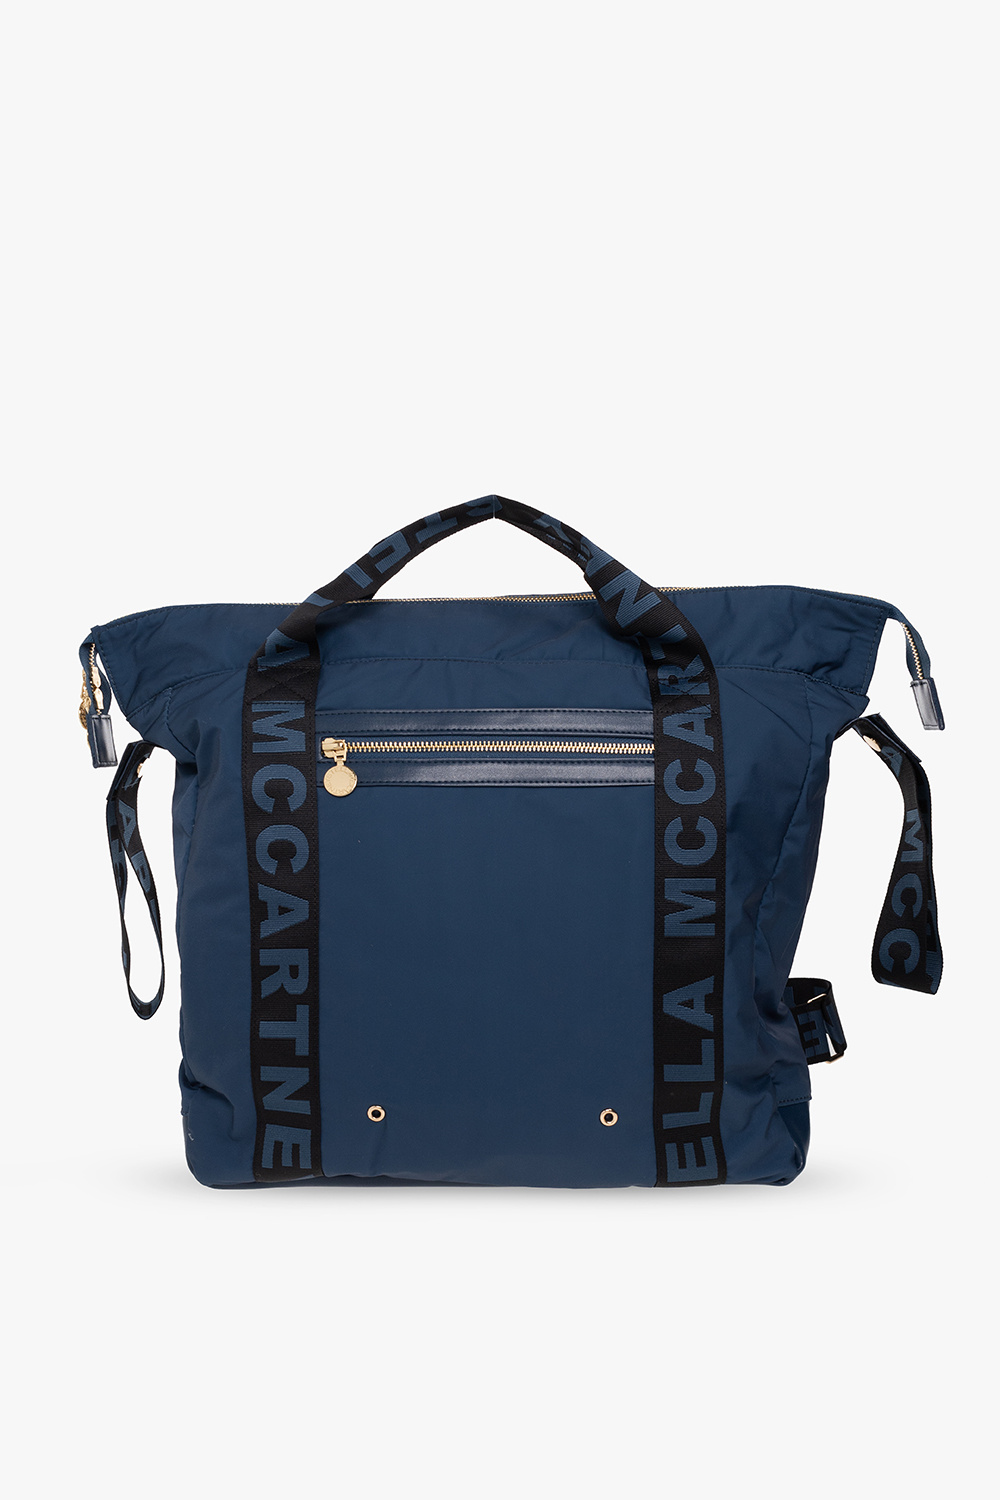 GenesinlifeShops Benin - Navy blue Changing backpack Stella core